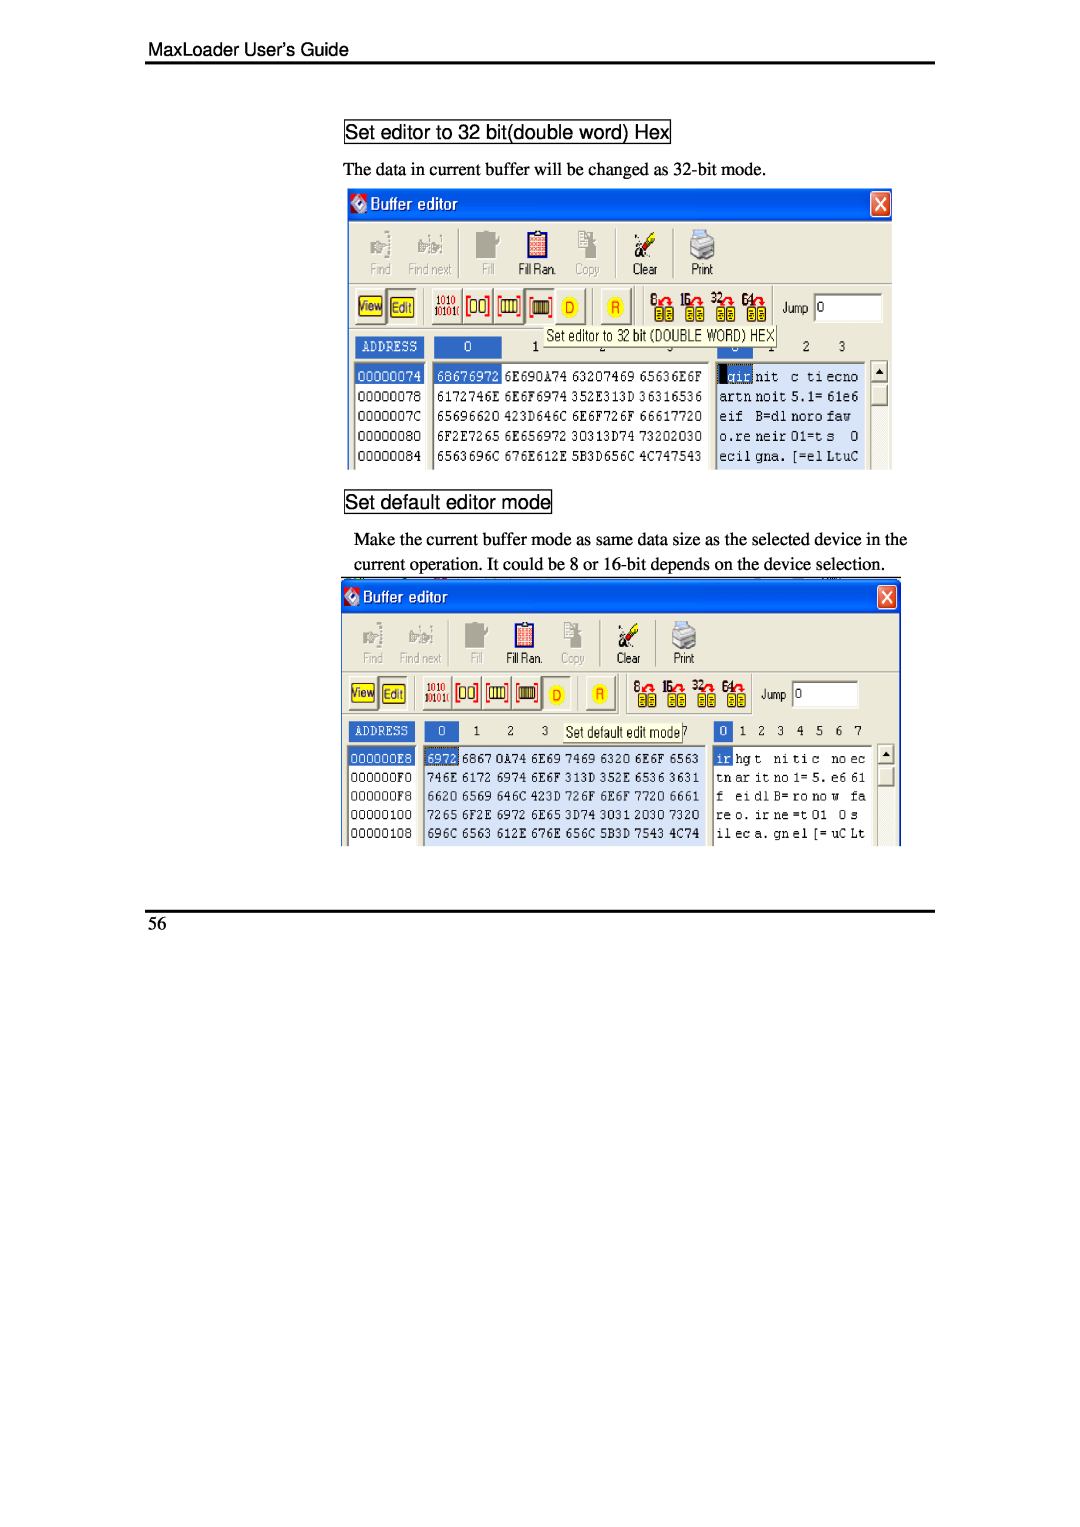 IBM manual Set editor to 32 bitdouble word Hex, Set default editor mode, MaxLoader User’s Guide 